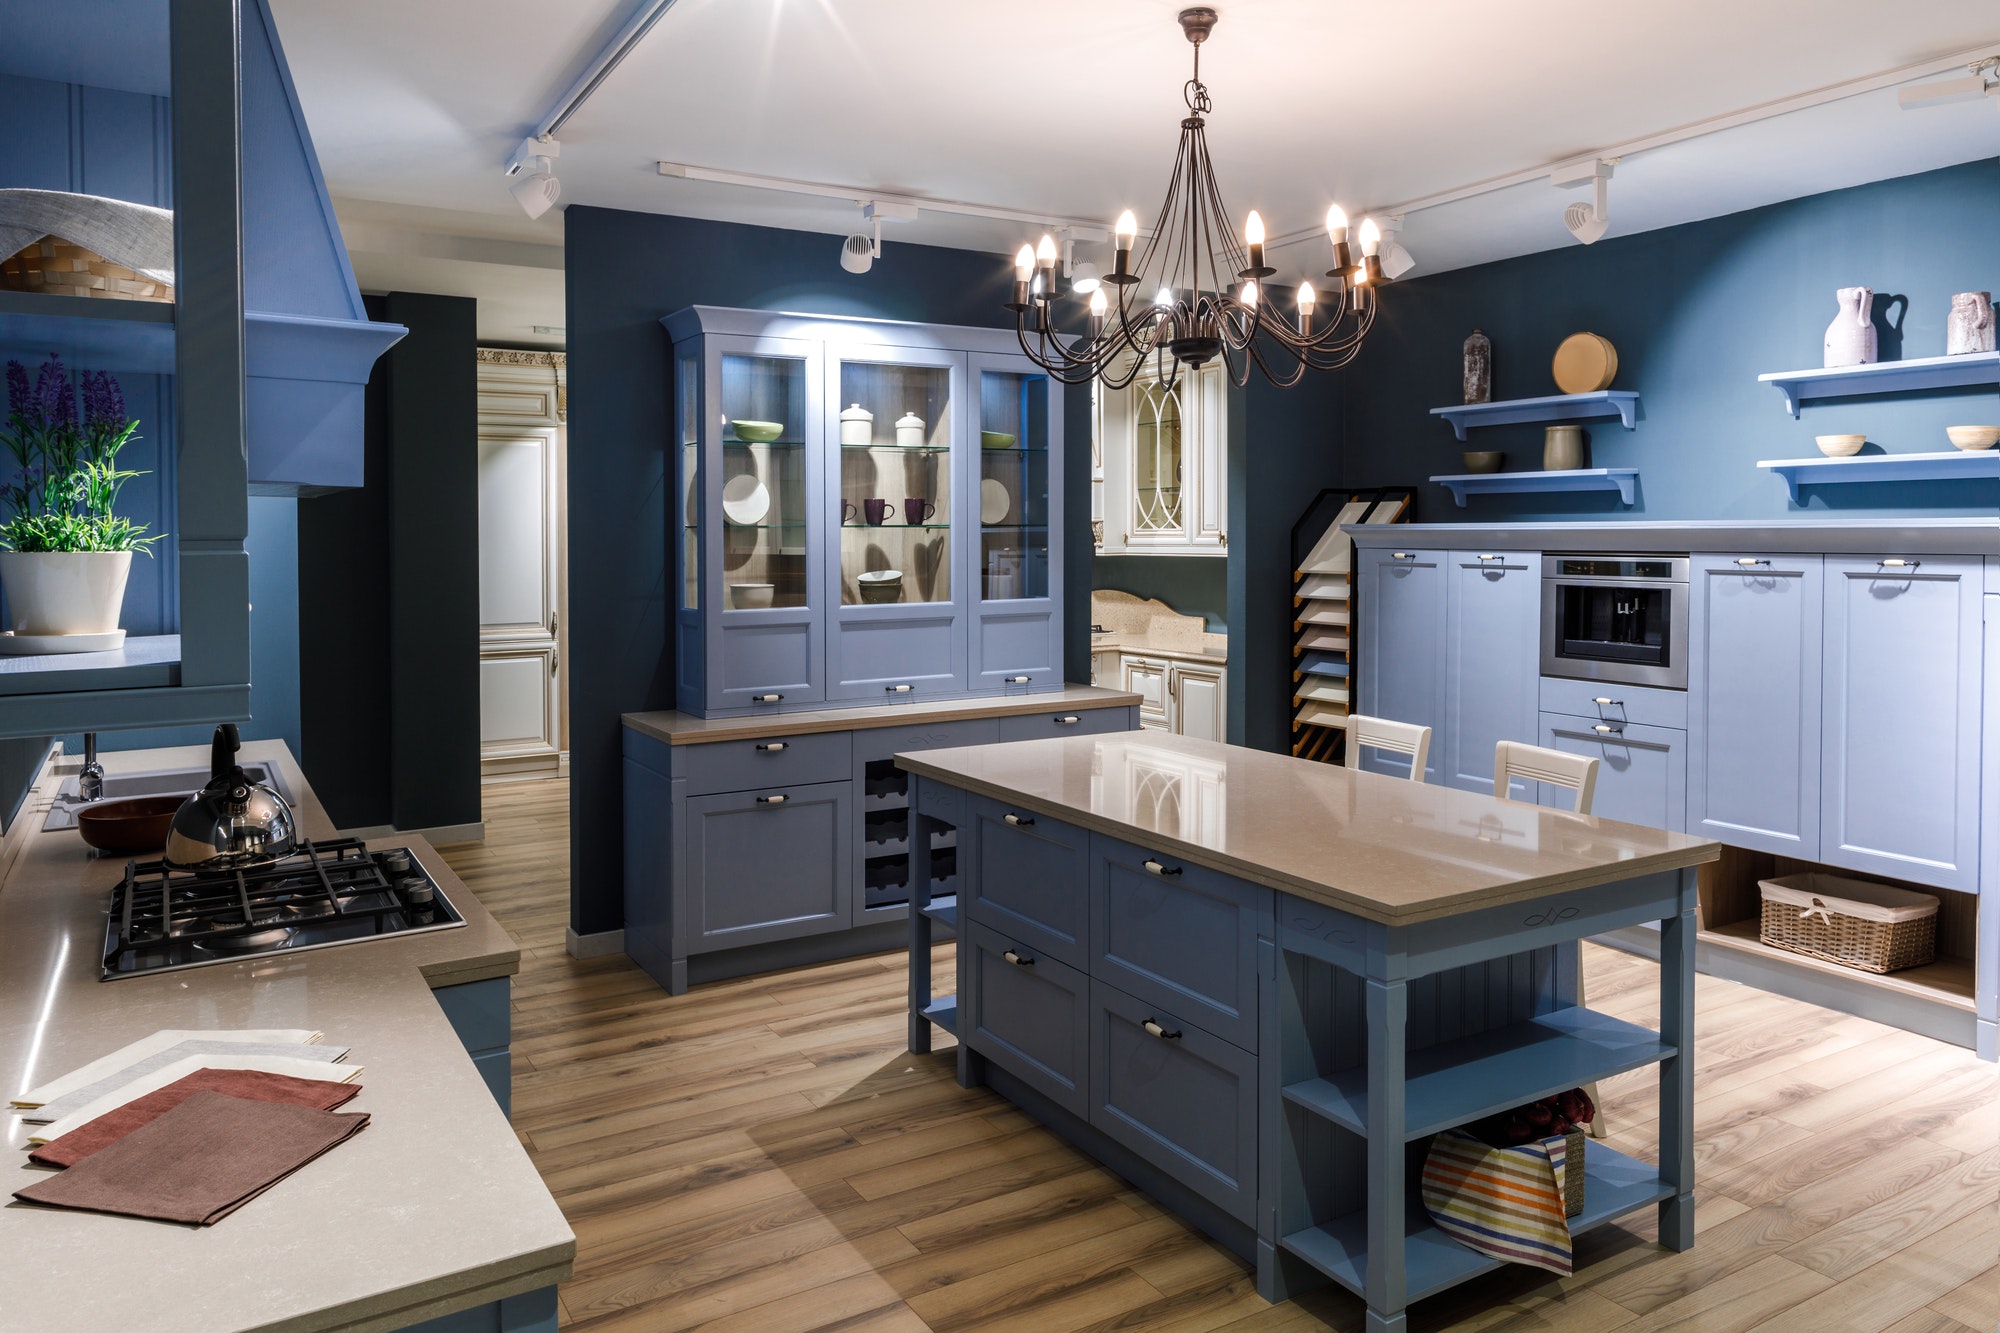 Renovated kitchen interior in blue tones